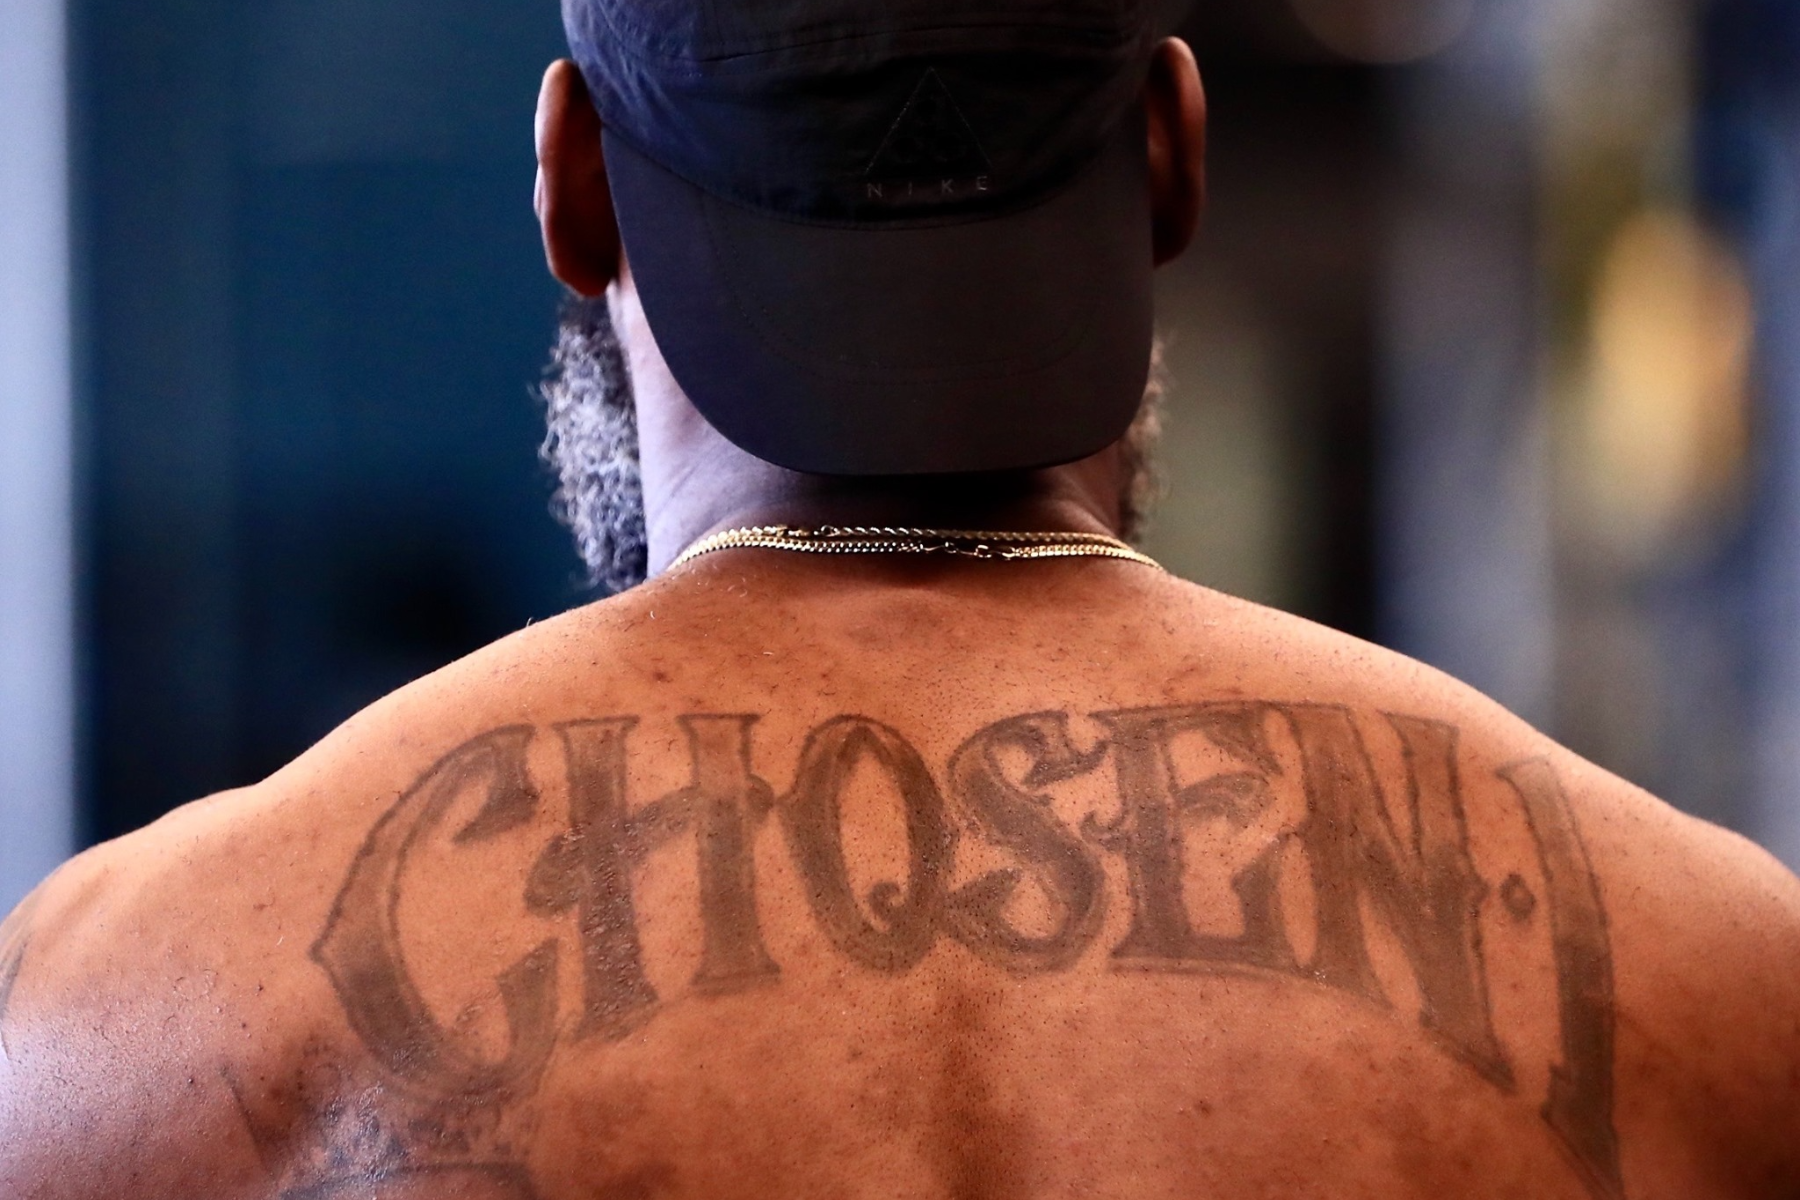 CHOSEN1 is LeBron James' first tattoo